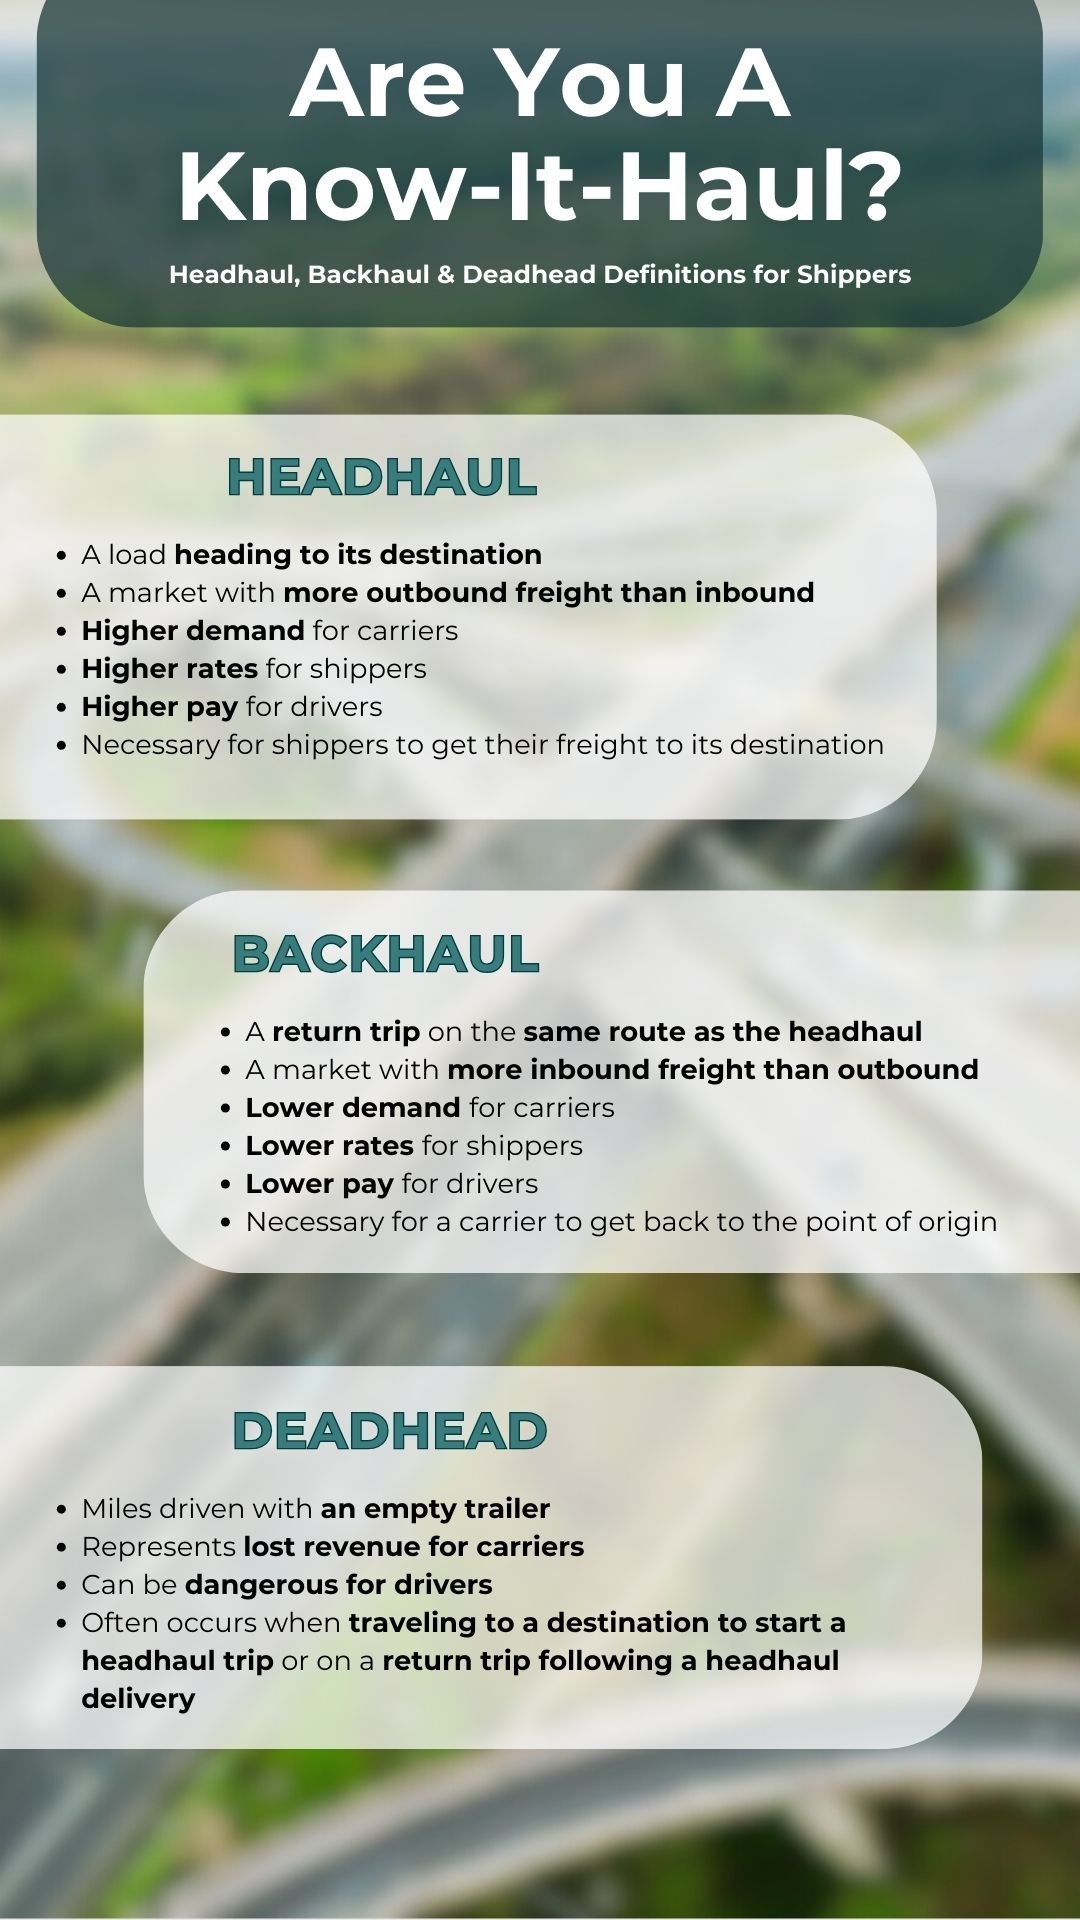 Headhaul vs. Backhaul Definitions for Shippers